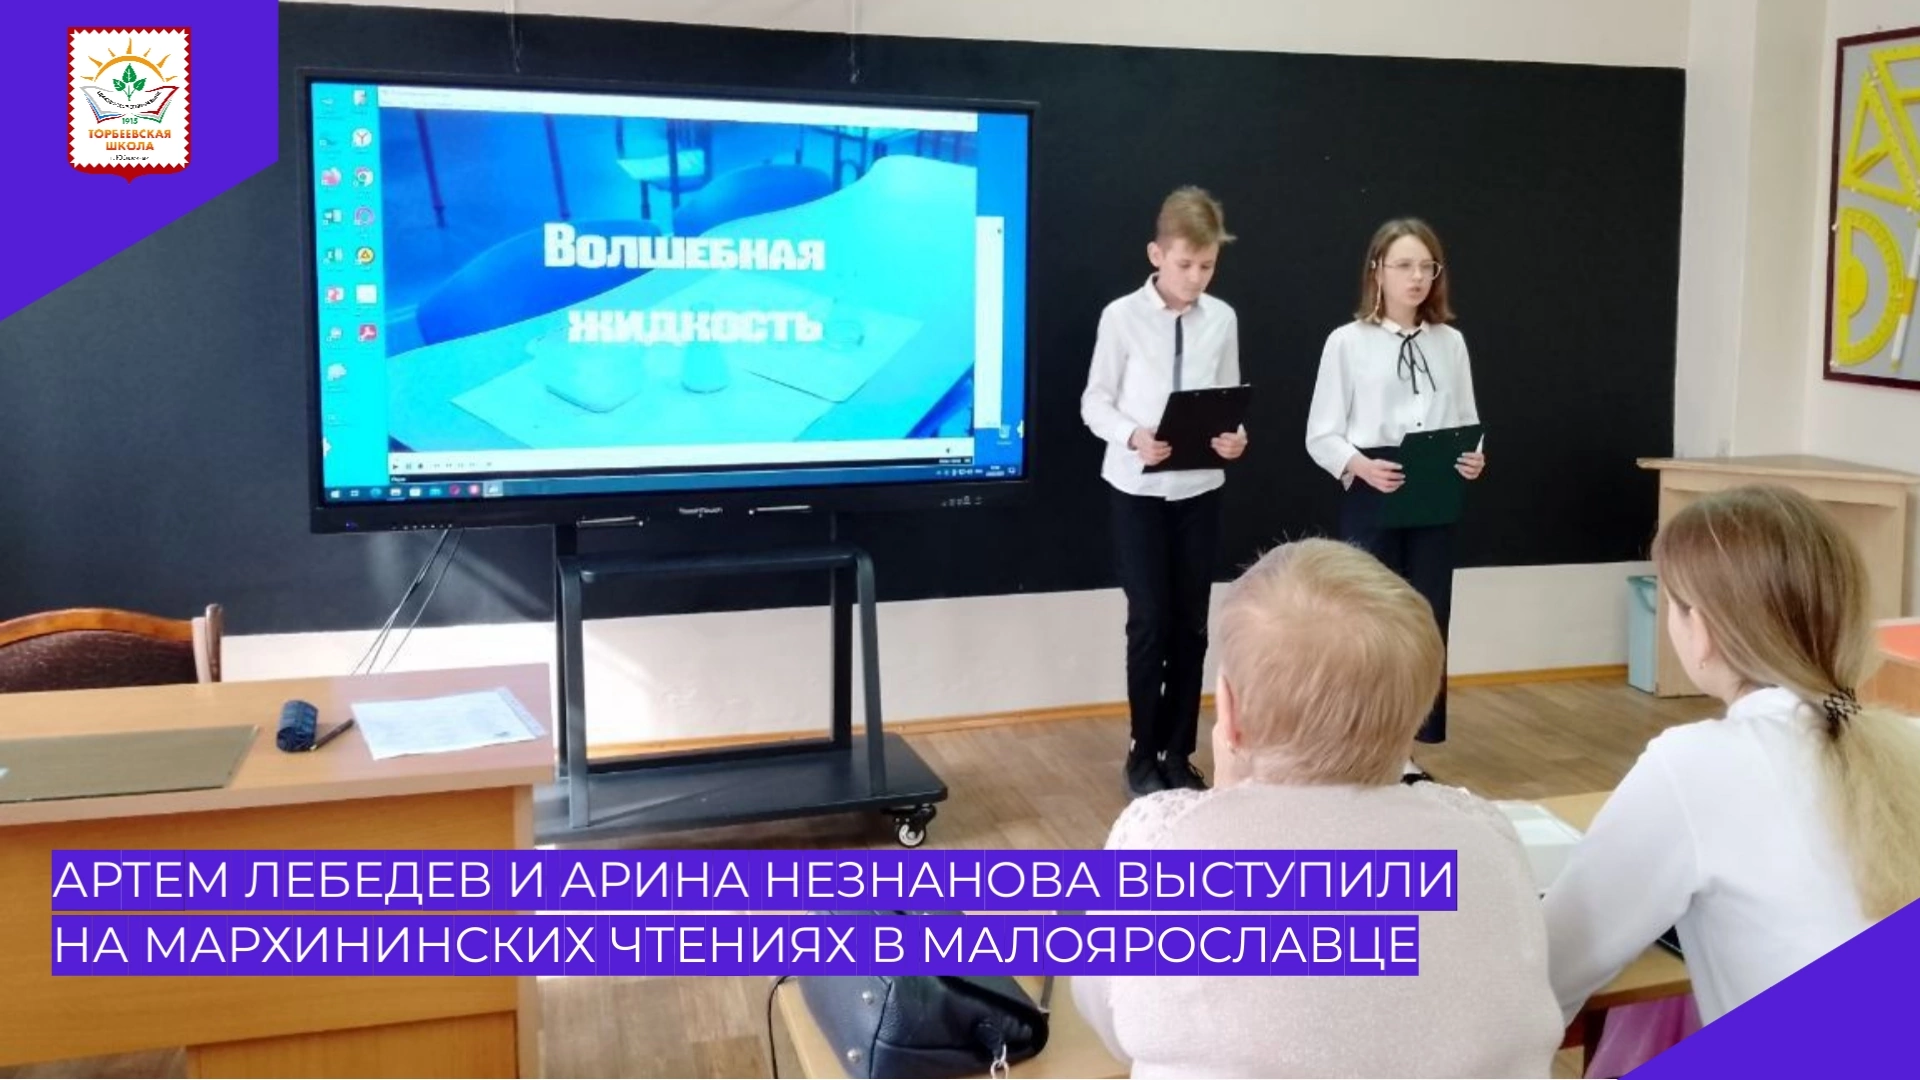 Артем Лебедев и Арина Незнанова приняли участие в Мархининских чтениях в Малоярославце.